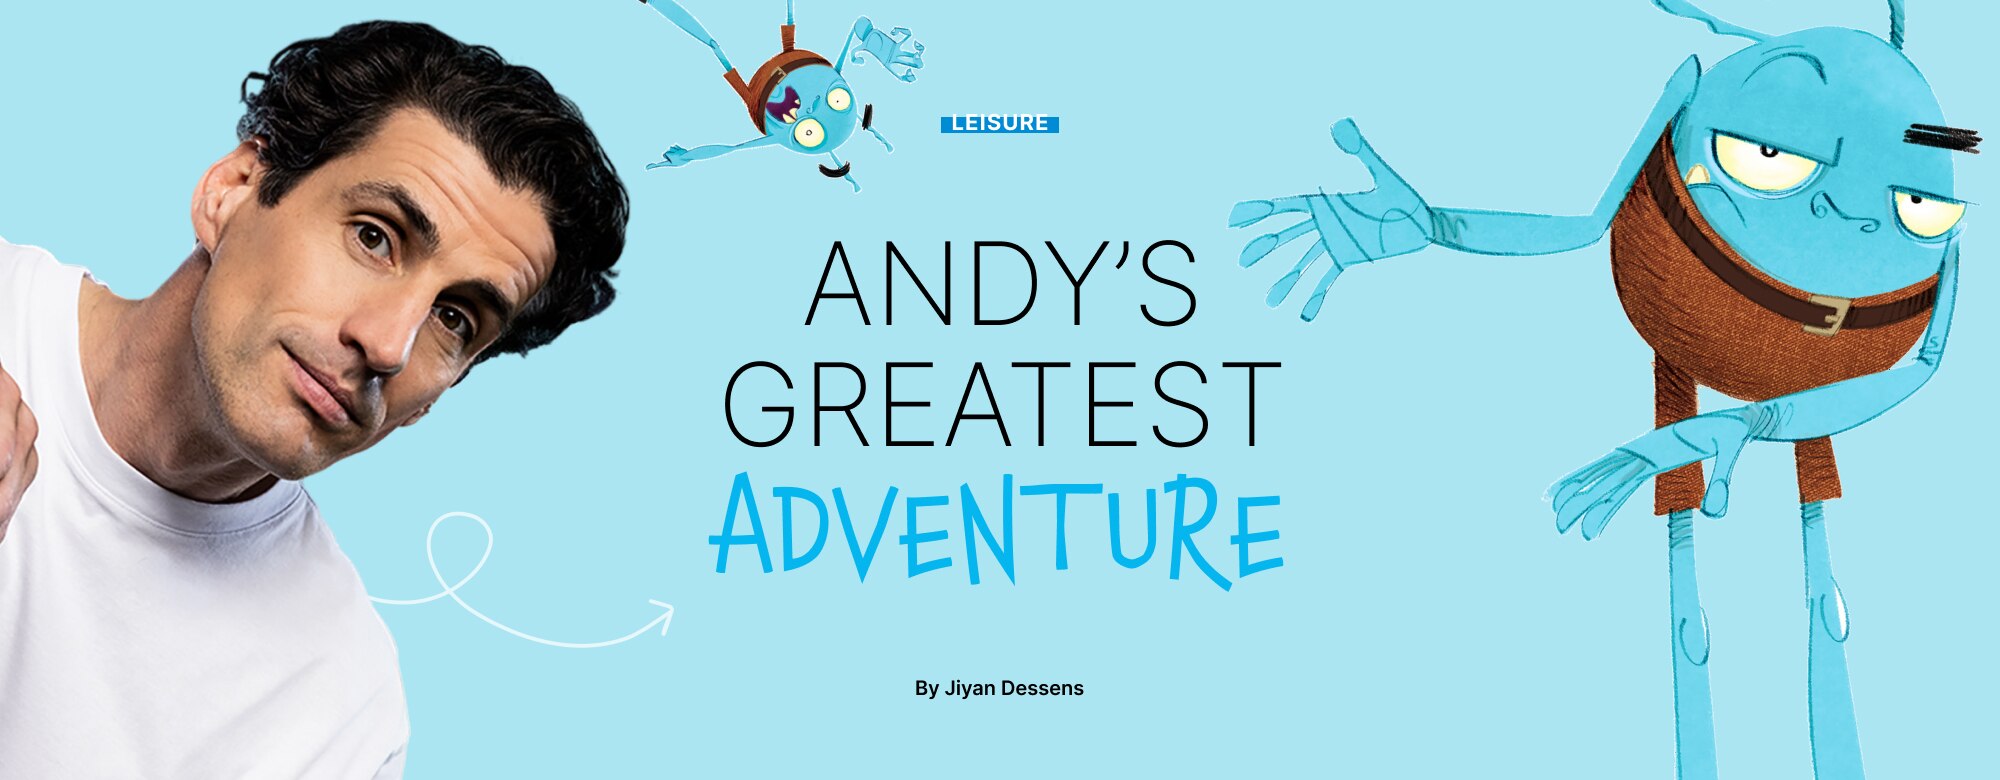 Andy's greatest adventure